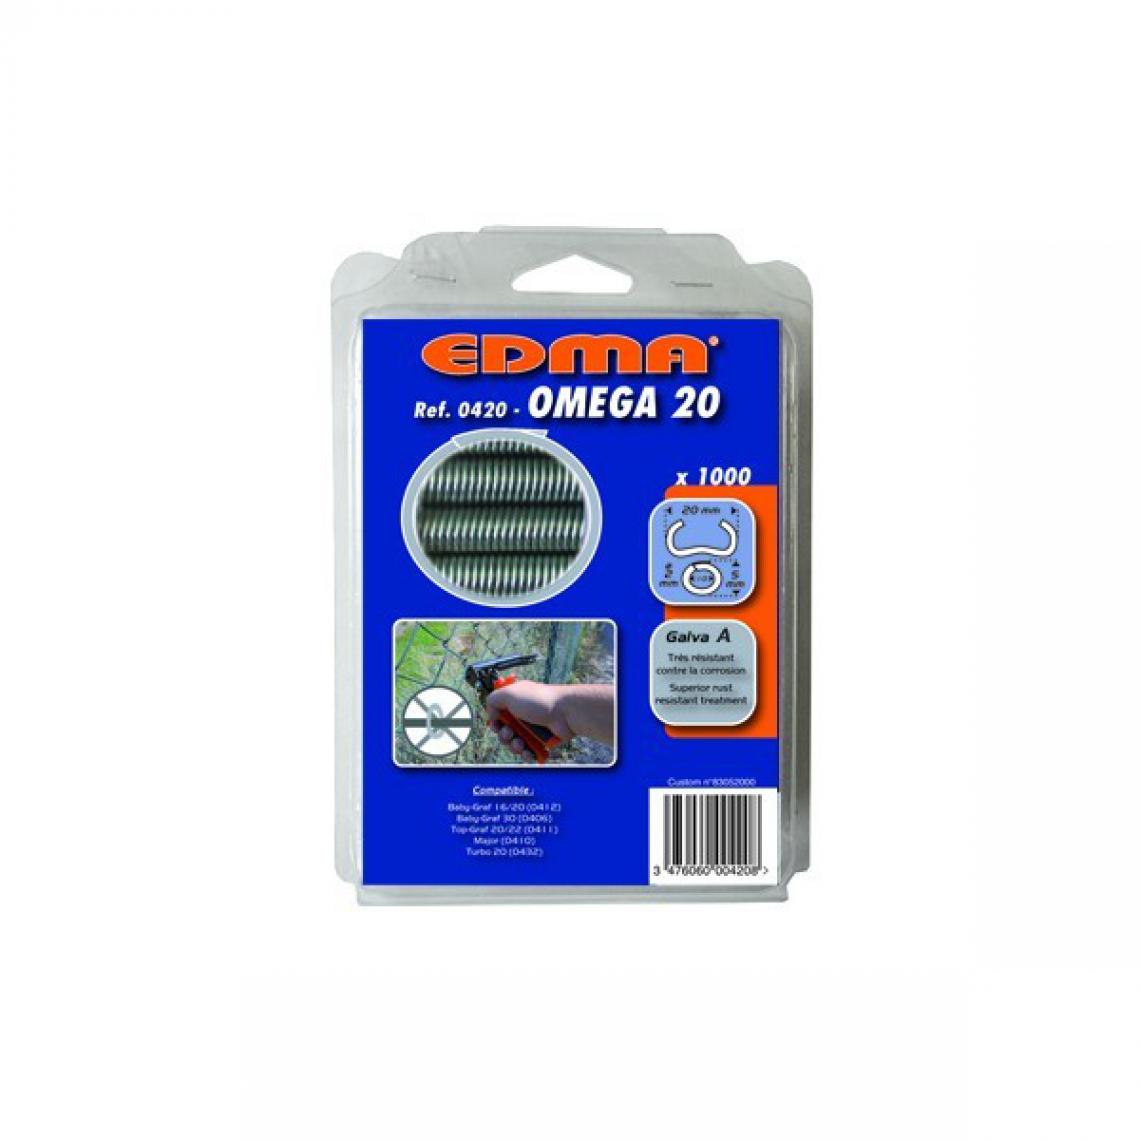 Edma Outillage - Agrafes Omega 20 EDMA - Galva A - 1000 pièces - 420 - Coffrets outils